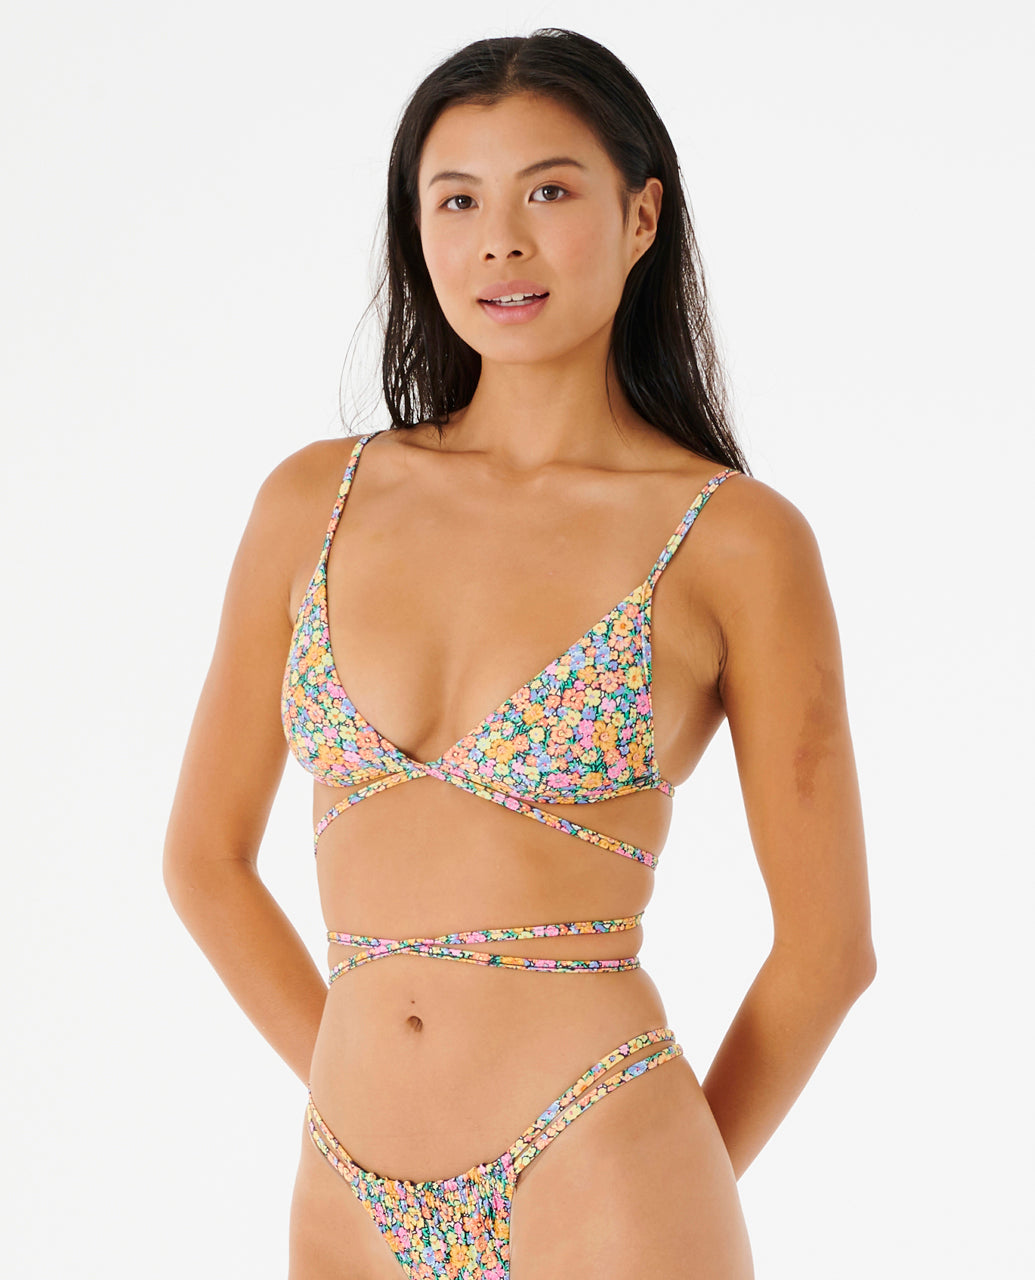 [SALE] Women's AFTERGLOW FLORAL WRAP TRI TOP Bikini Set Tops Swimsuit